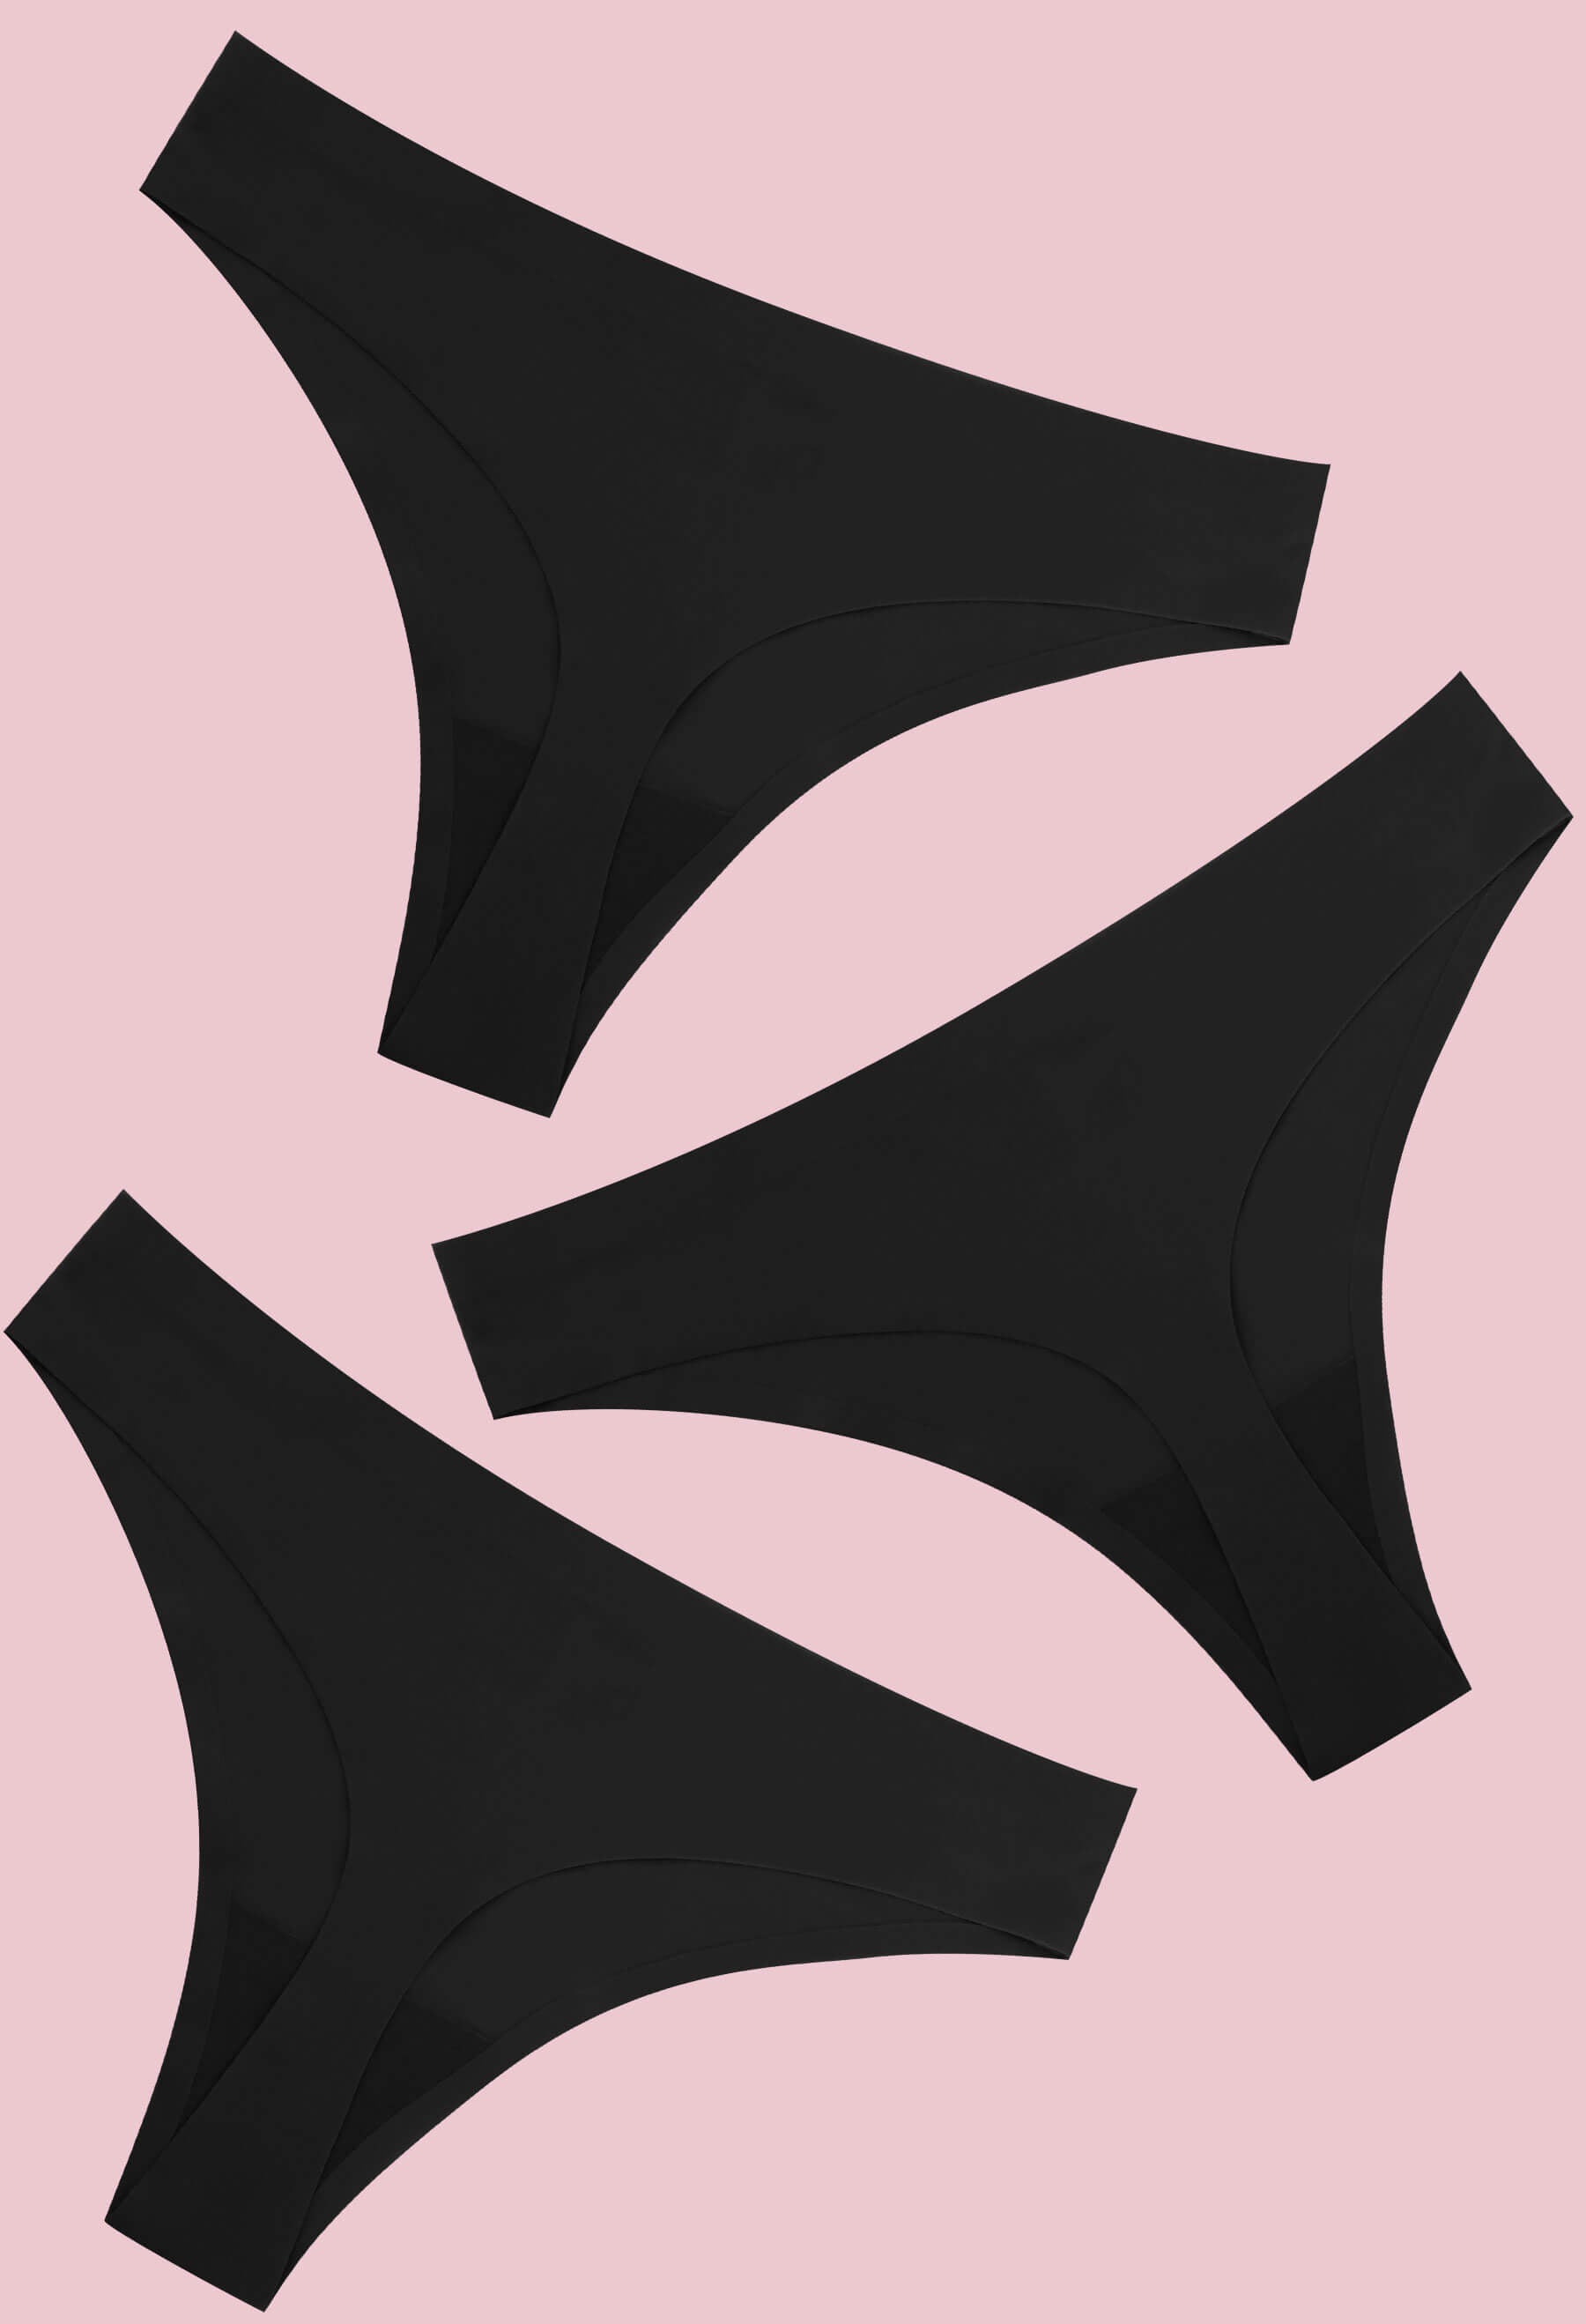 Womens String Bikini Briefs/Ultra-Soft Stretch No-Show Panties, 3 Pack